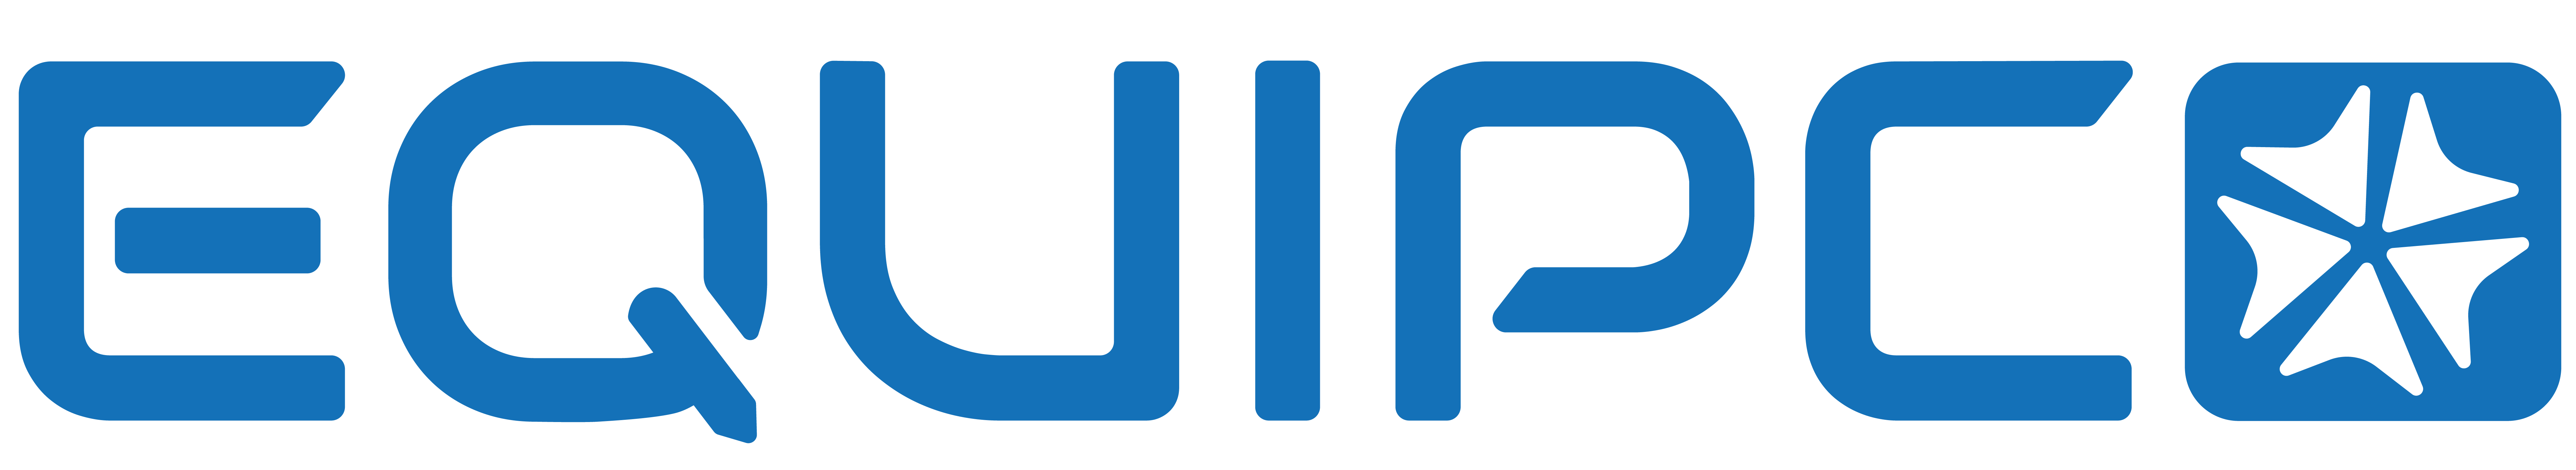 equip logo